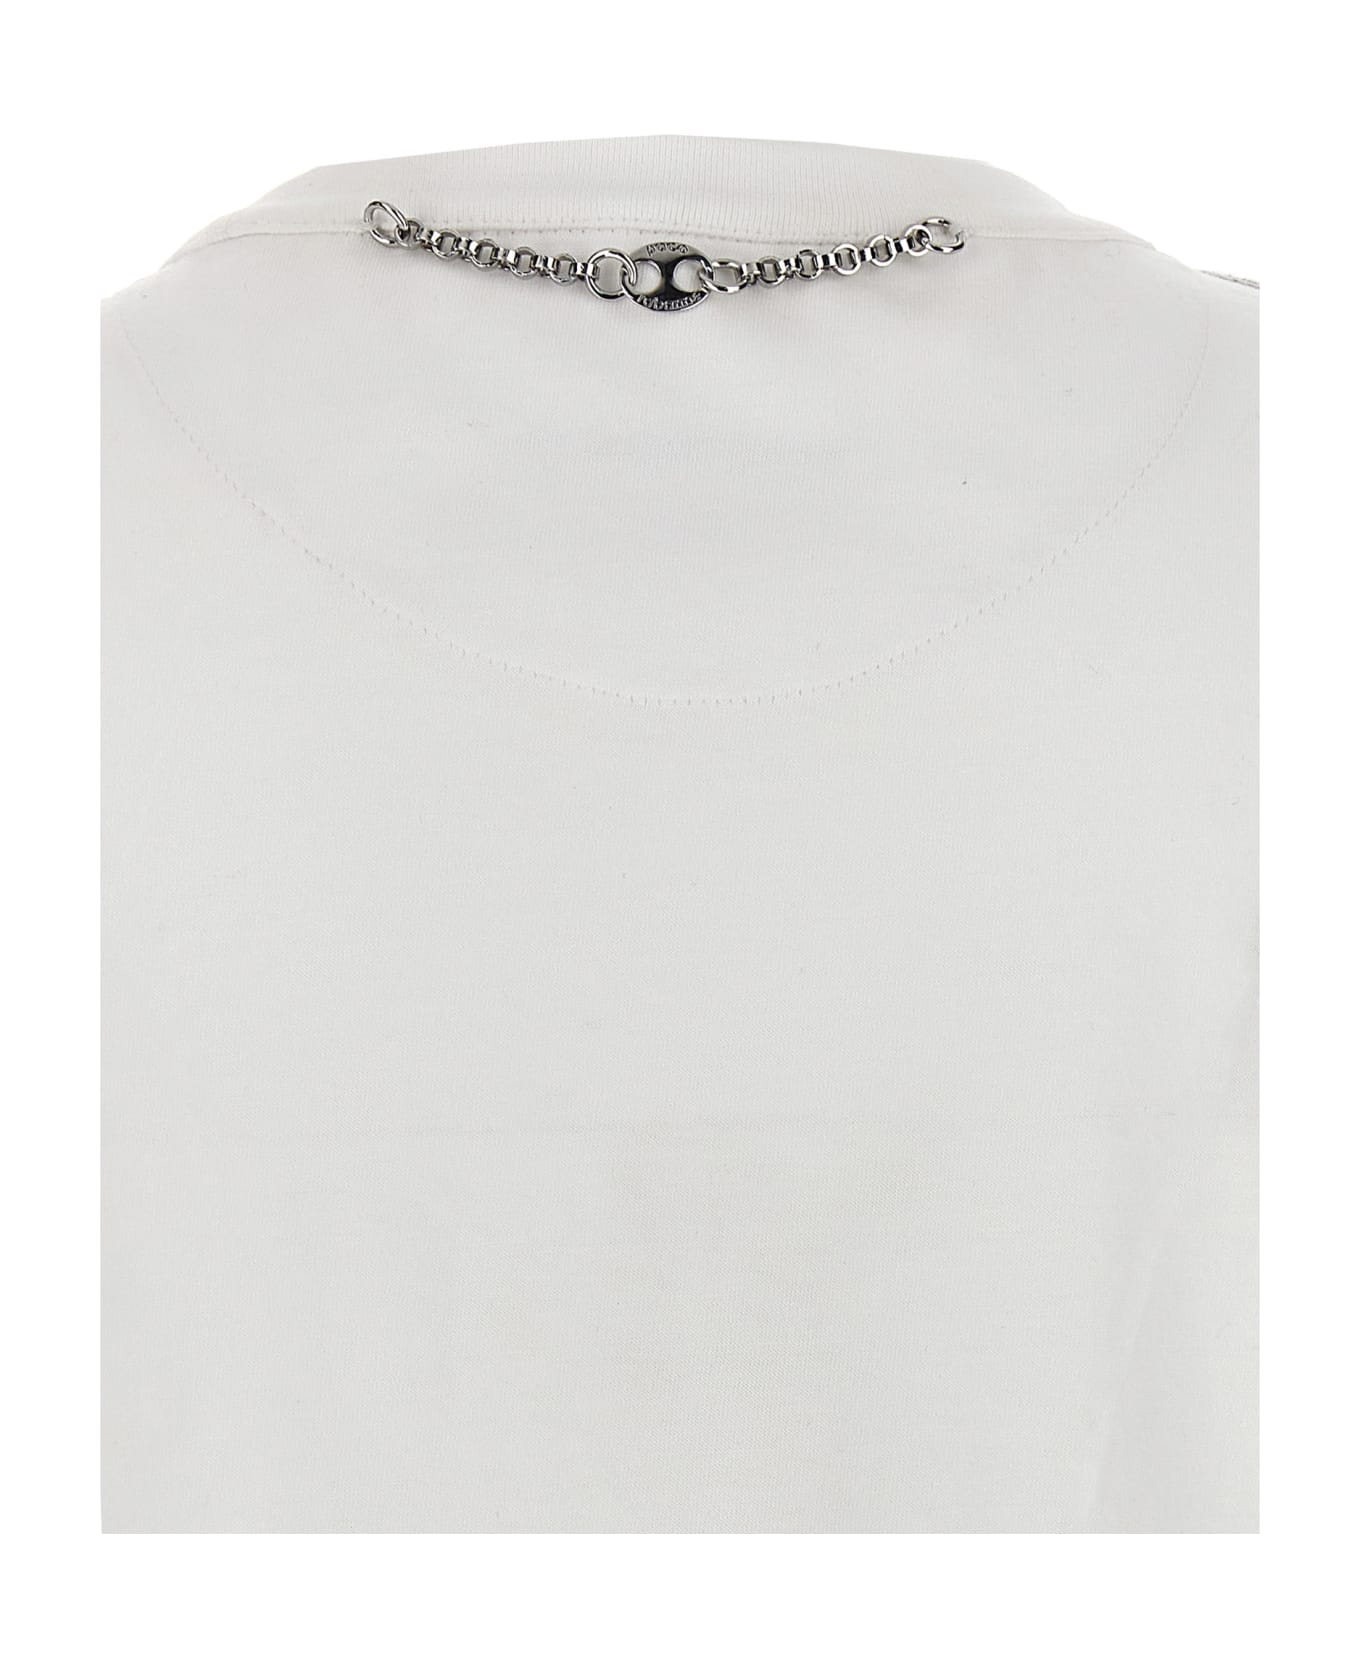 Paco Rabanne Metal Mesh T-shirt - Silver White